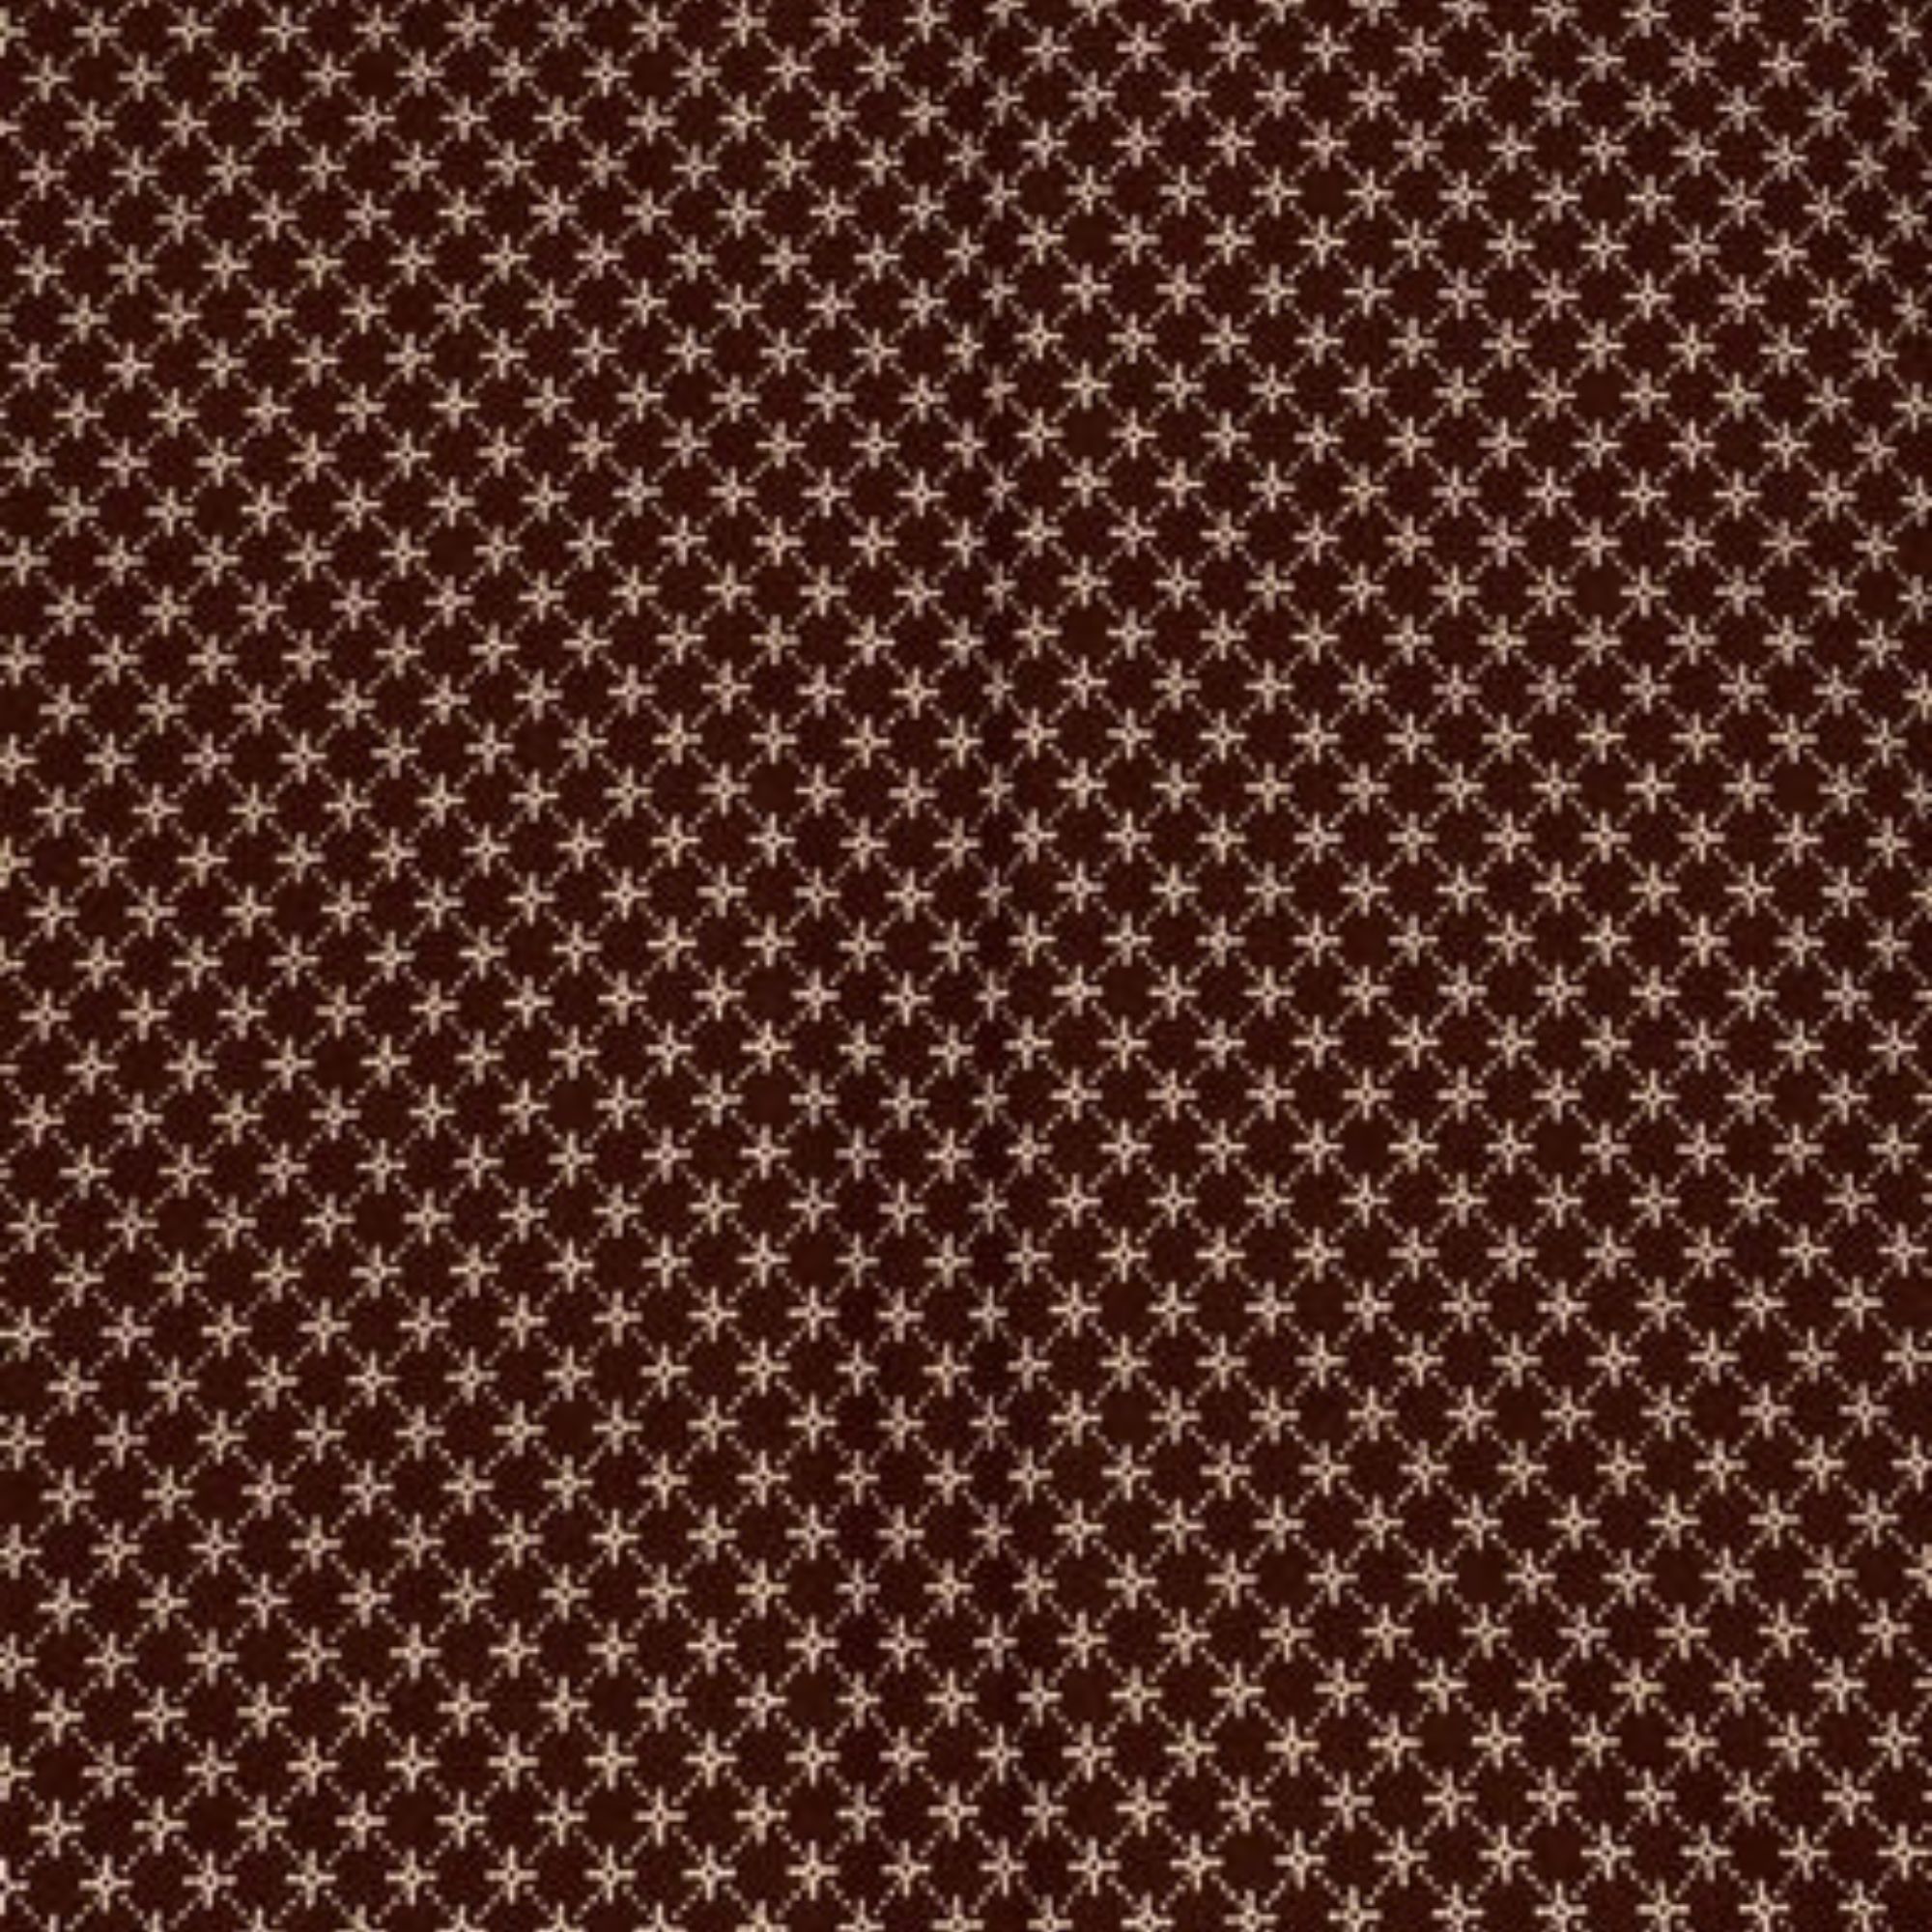 Tela algodón estampada patchwork rombos marrones y fondo beige - KukiFabrics